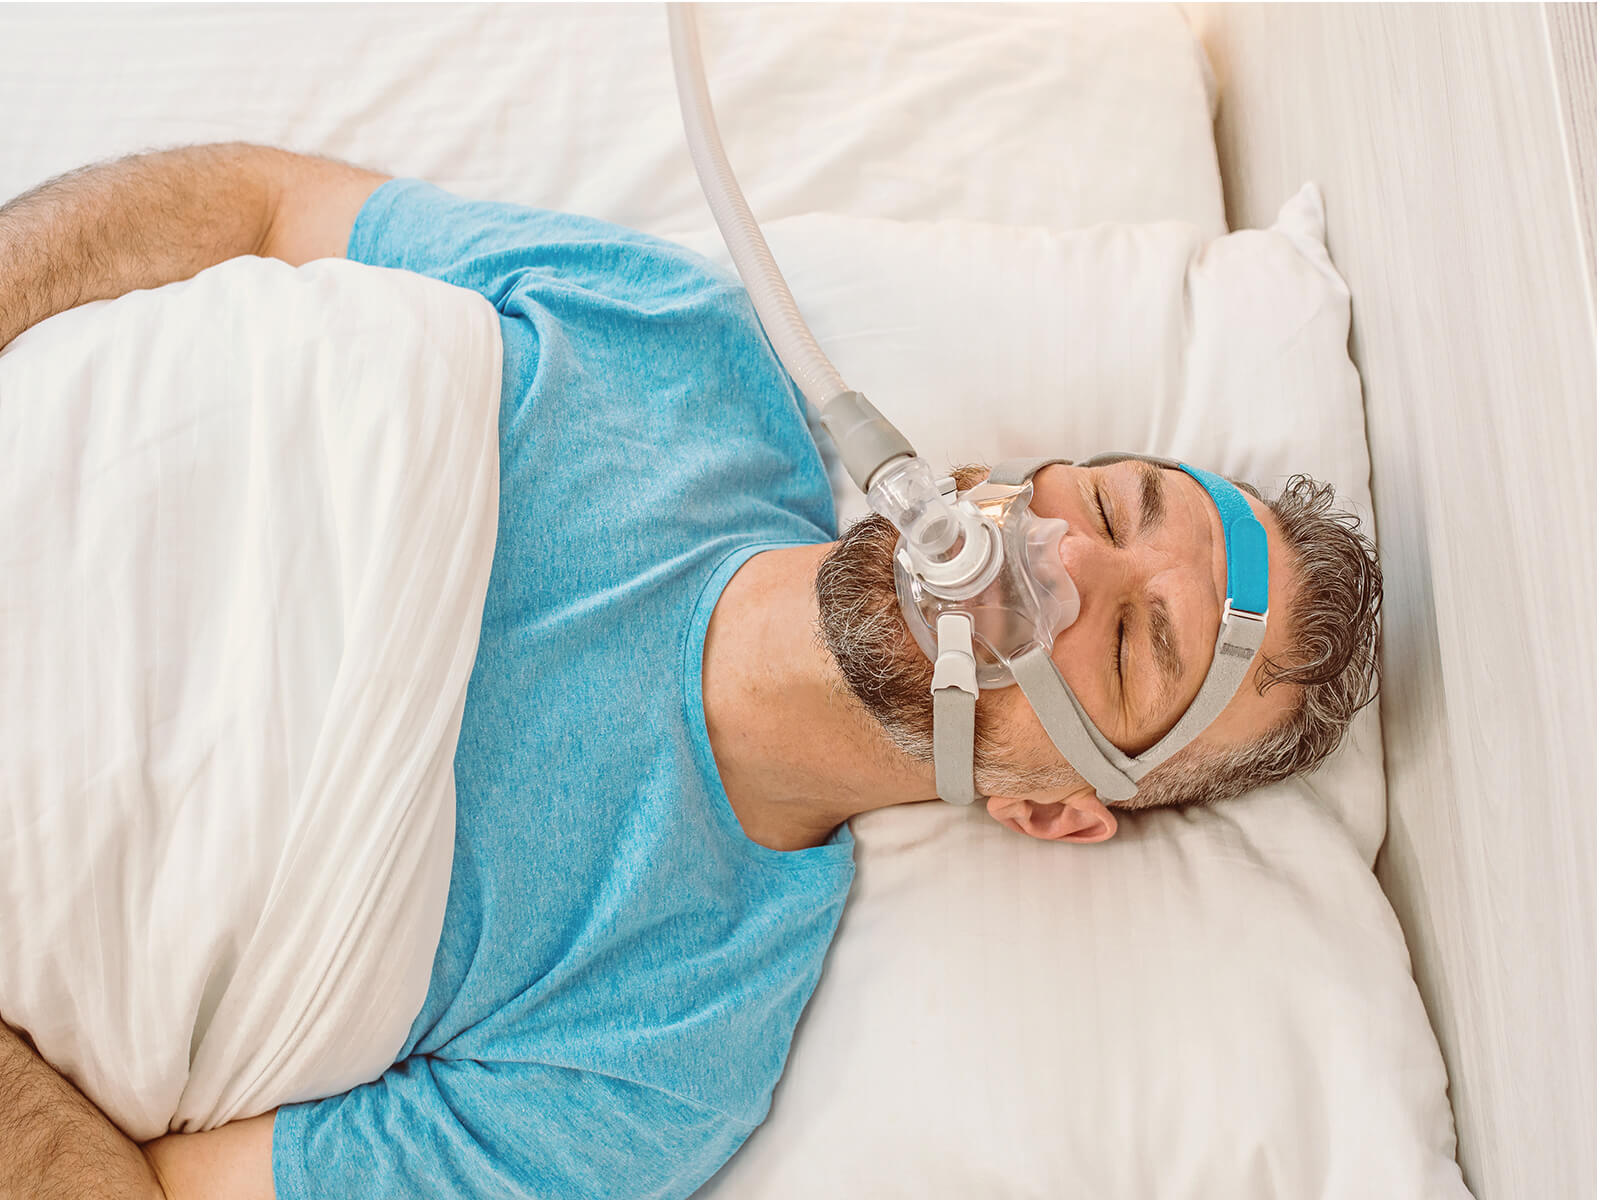 Get Better Rest With Sleep Apnea Treatment